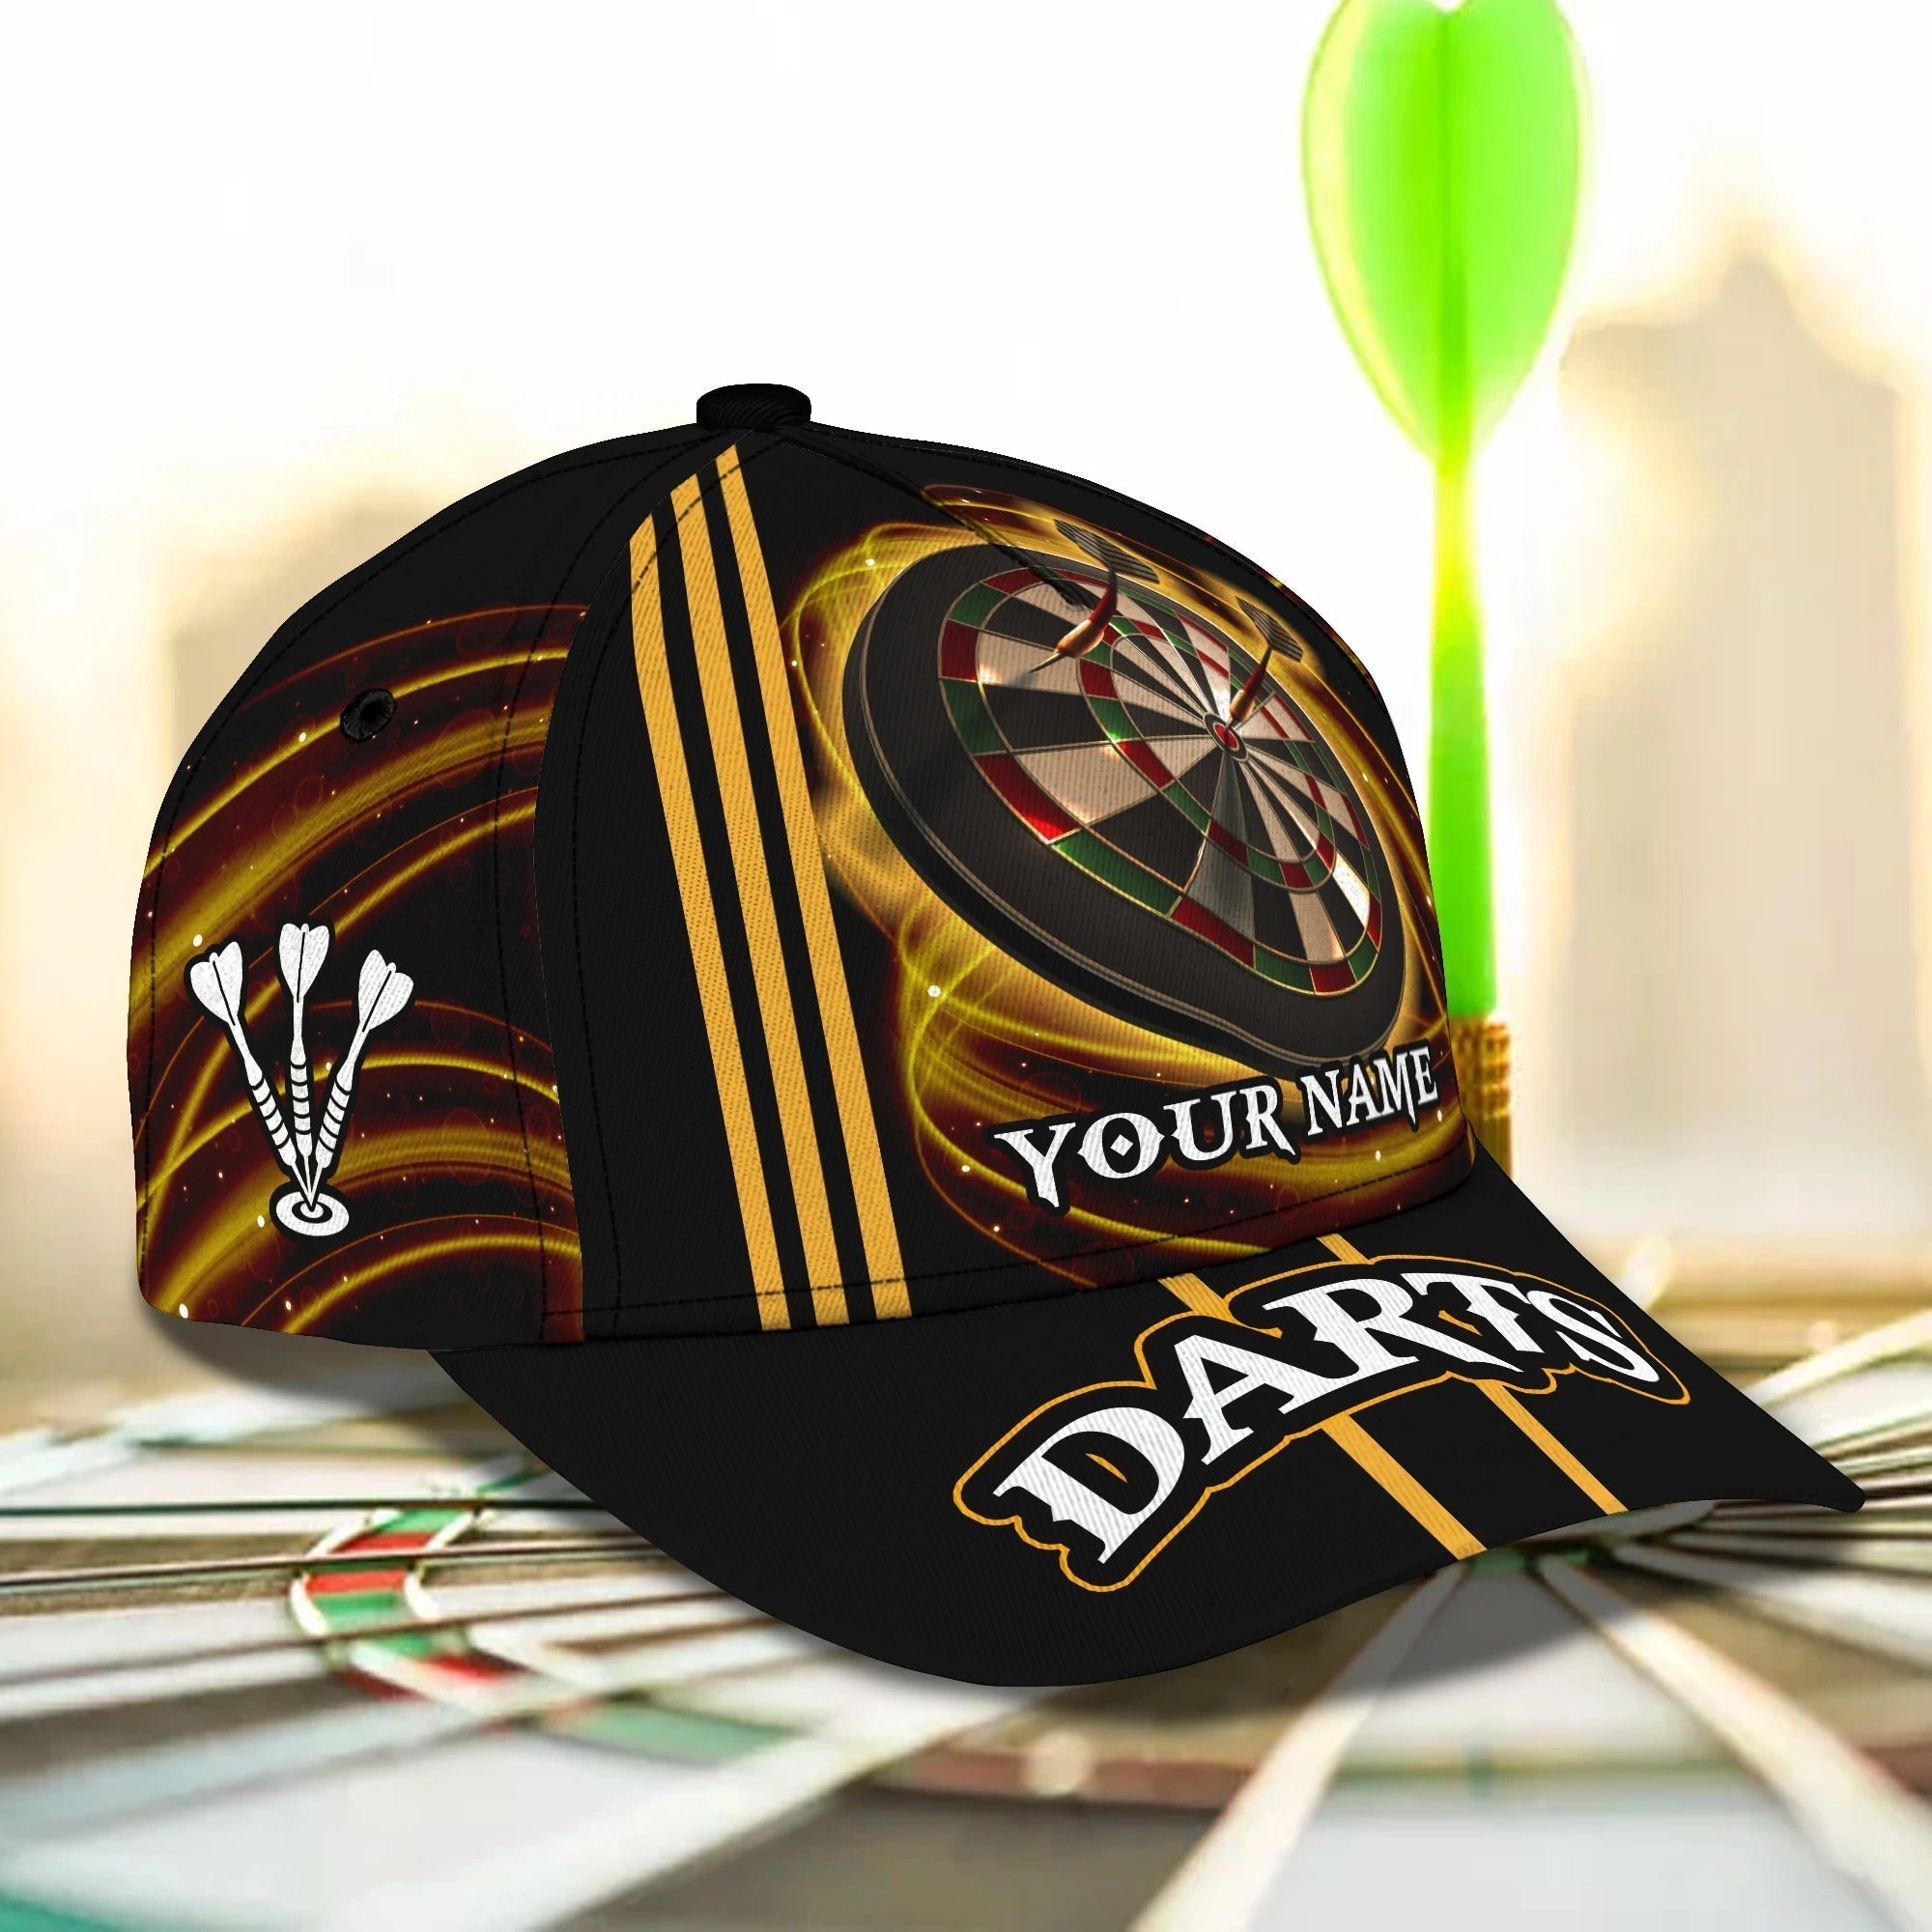 Personalized Classic Dart Cap/ Birthday Present To Darter Friend/ Dart Lover Cap Hat/ Darting Cap